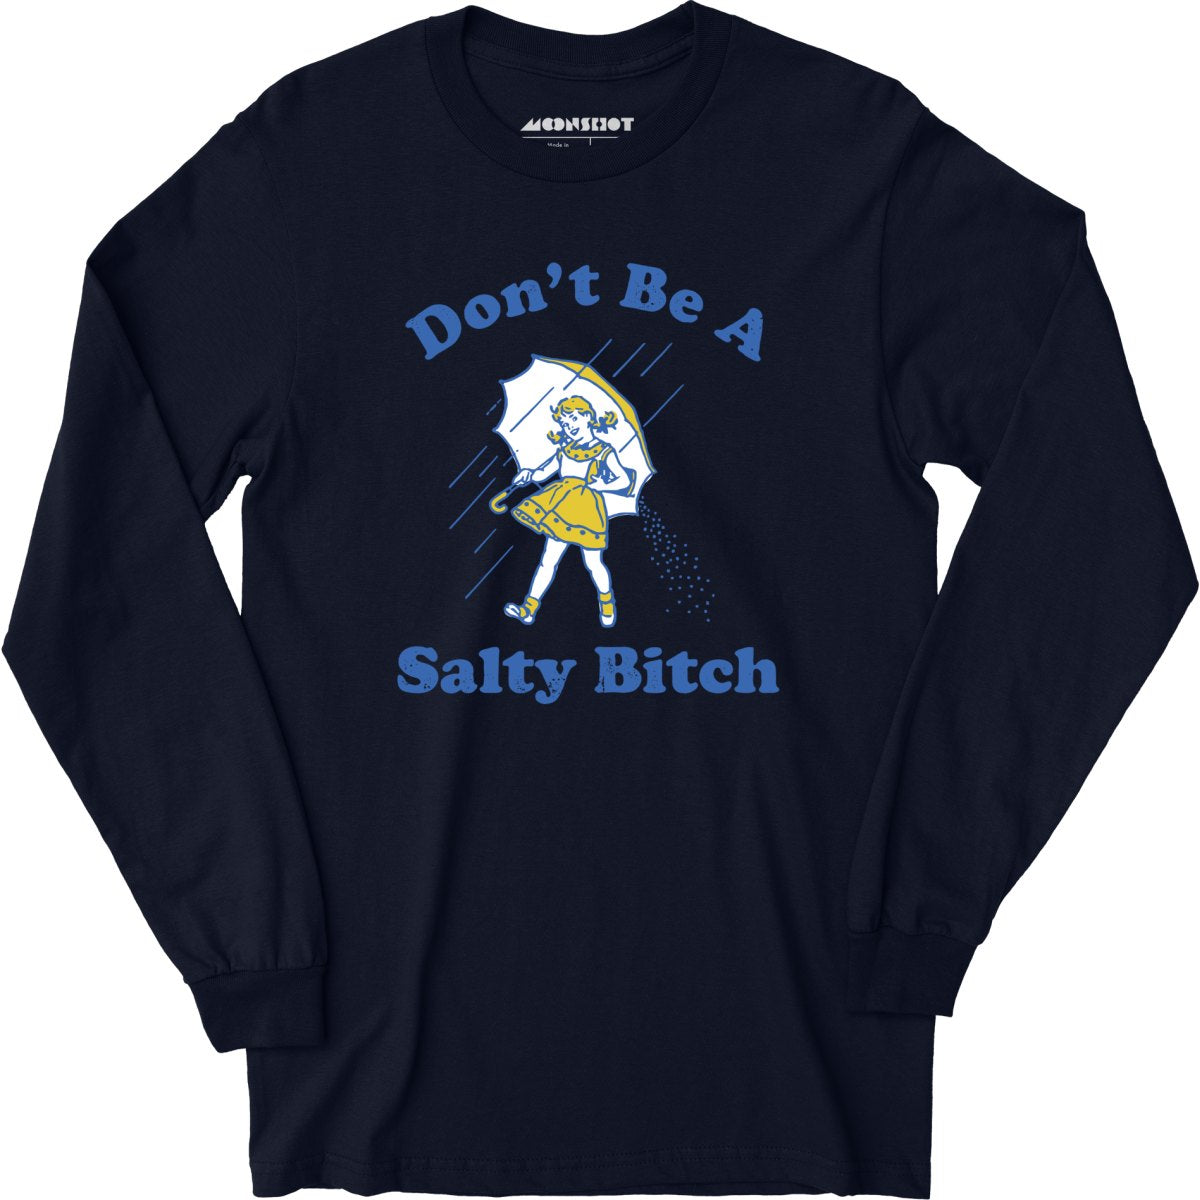 Don't Be a Salty Bitch - Long Sleeve T-Shirt